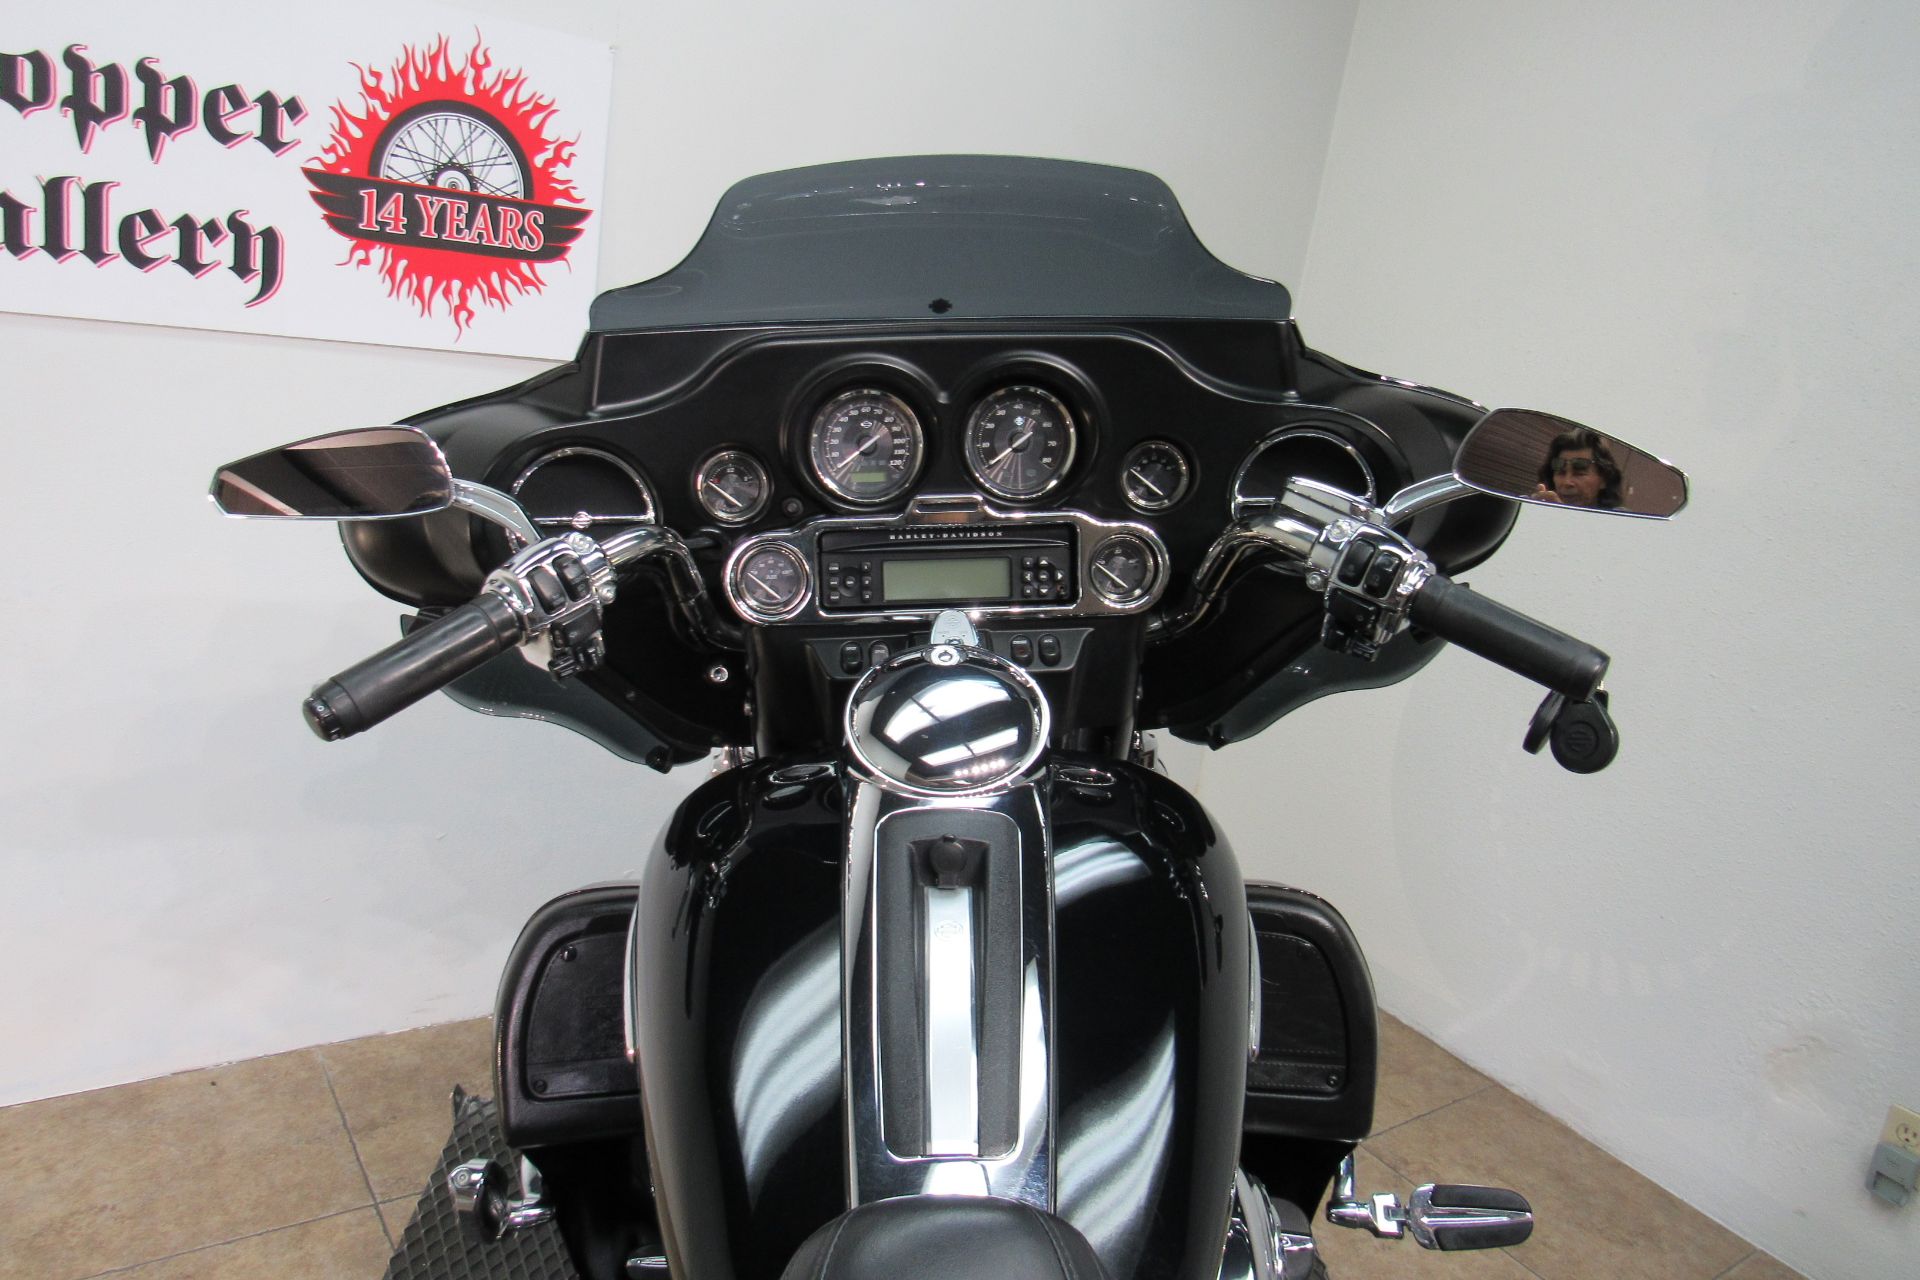 2012 Harley-Davidson Electra Glide® Ultra Limited in Temecula, California - Photo 33